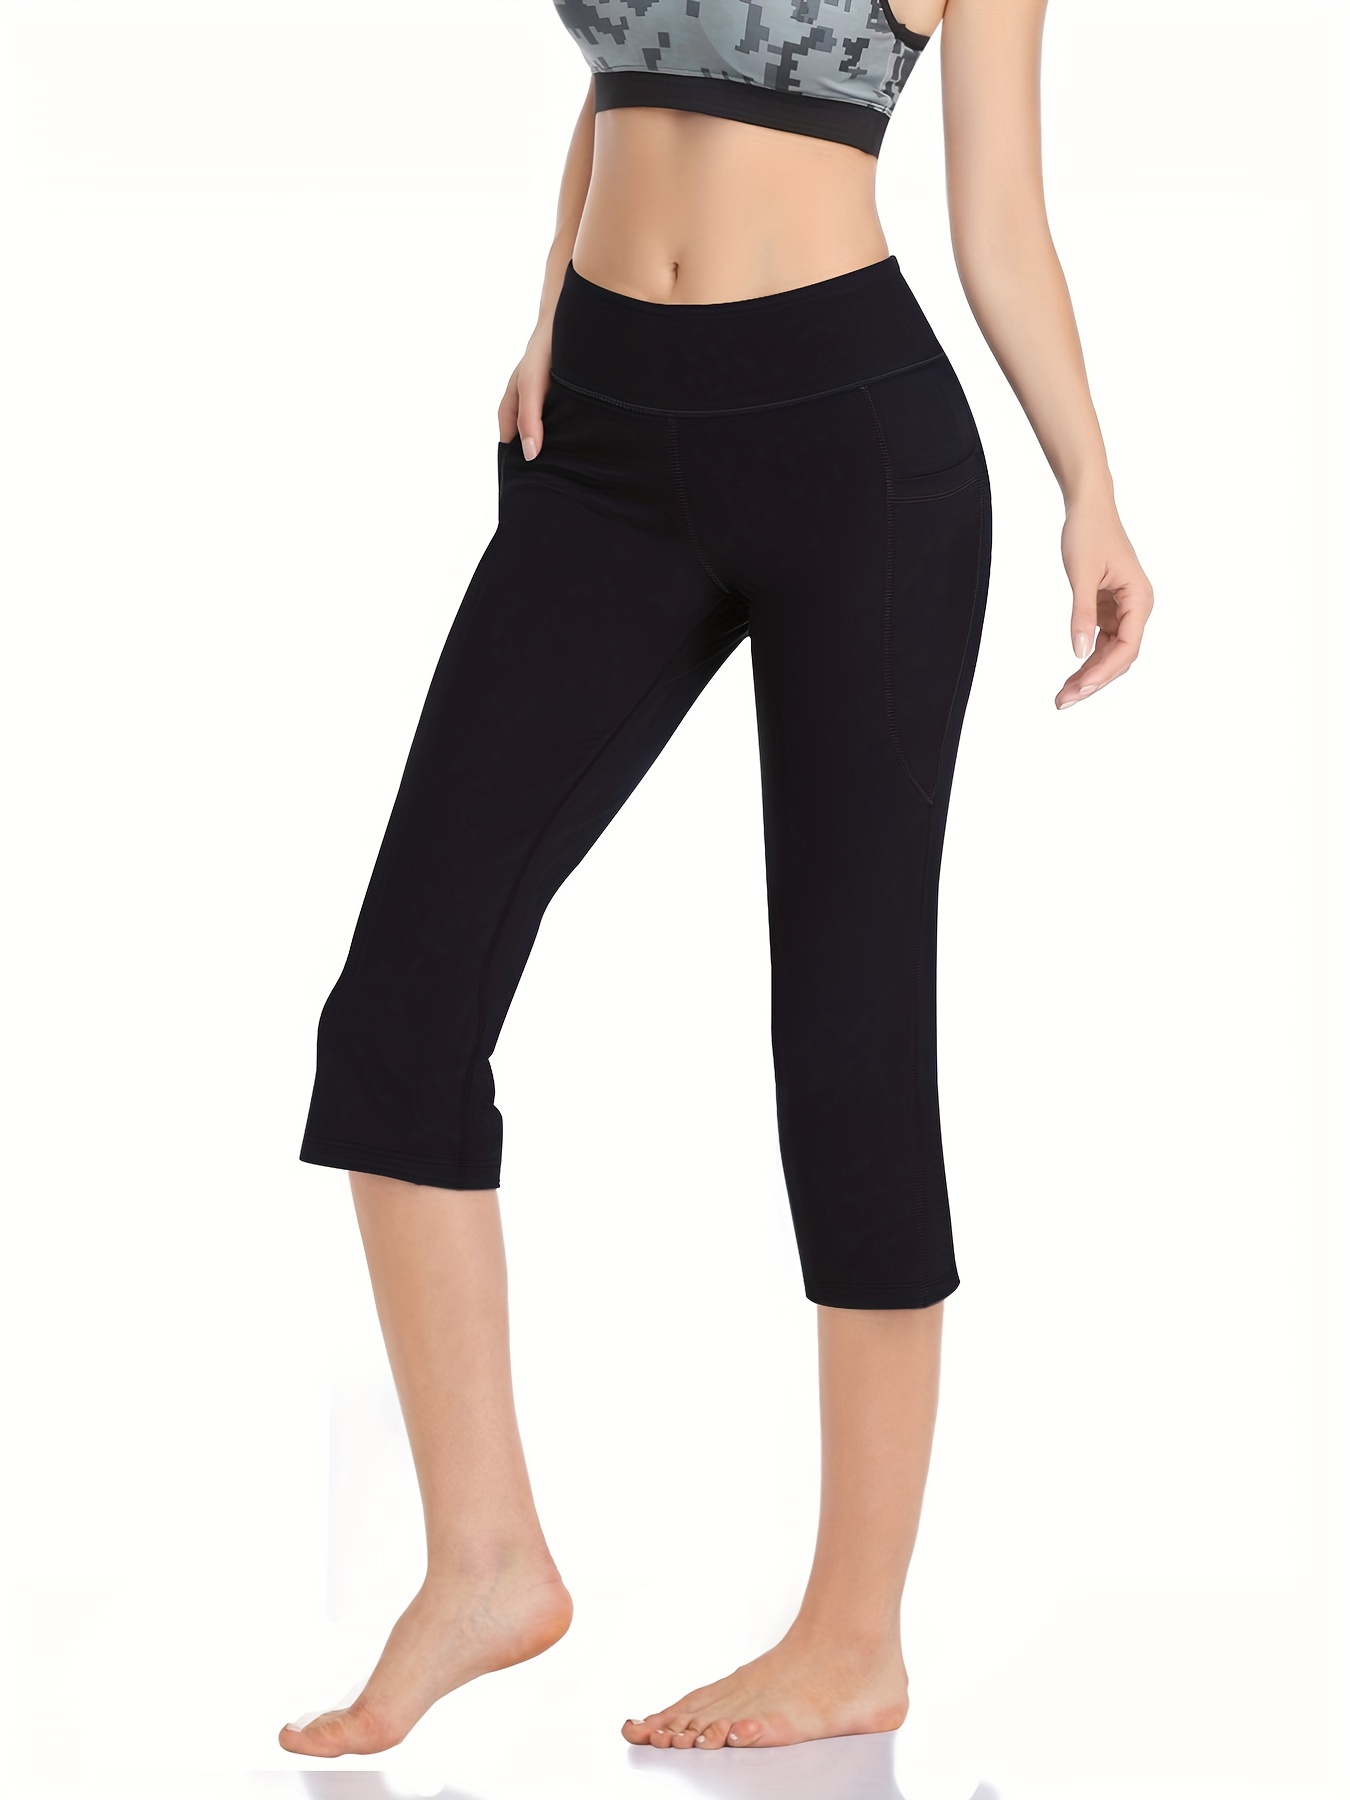 Bootleg Yoga Capris Pants for Women High Waist Workout Flare Crop Leggings